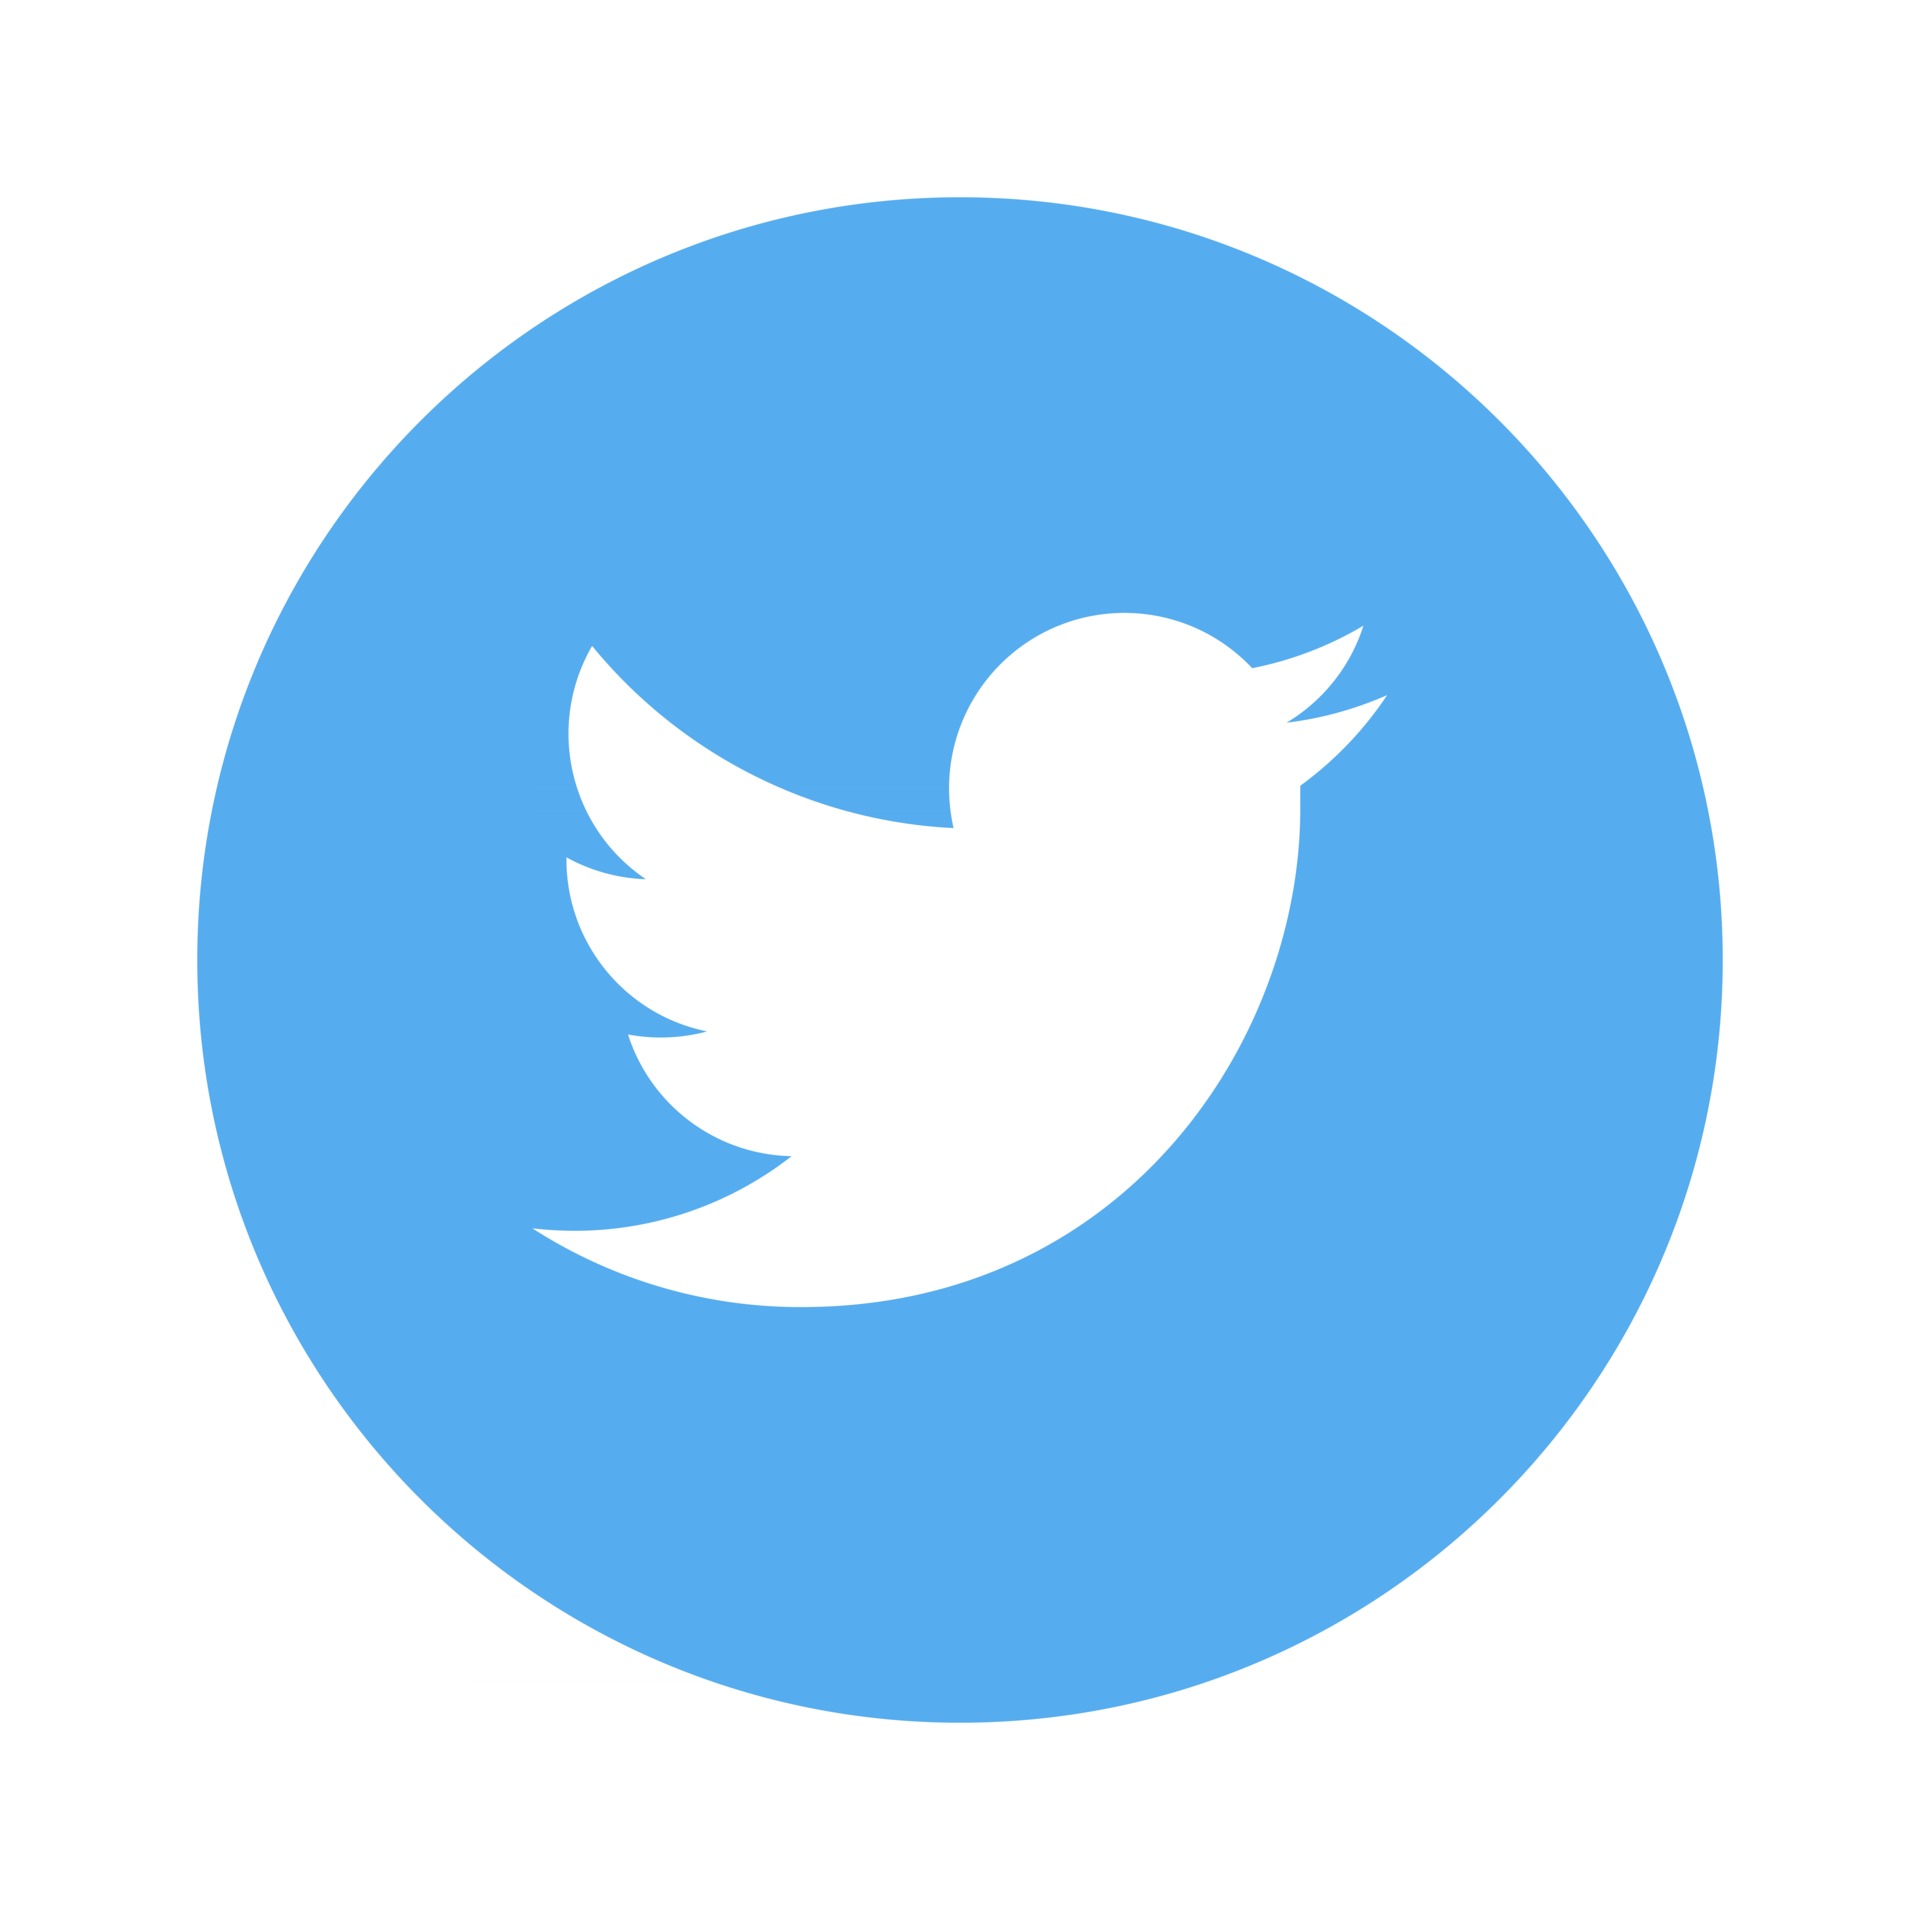 social media twitter logo blue isolated free vector